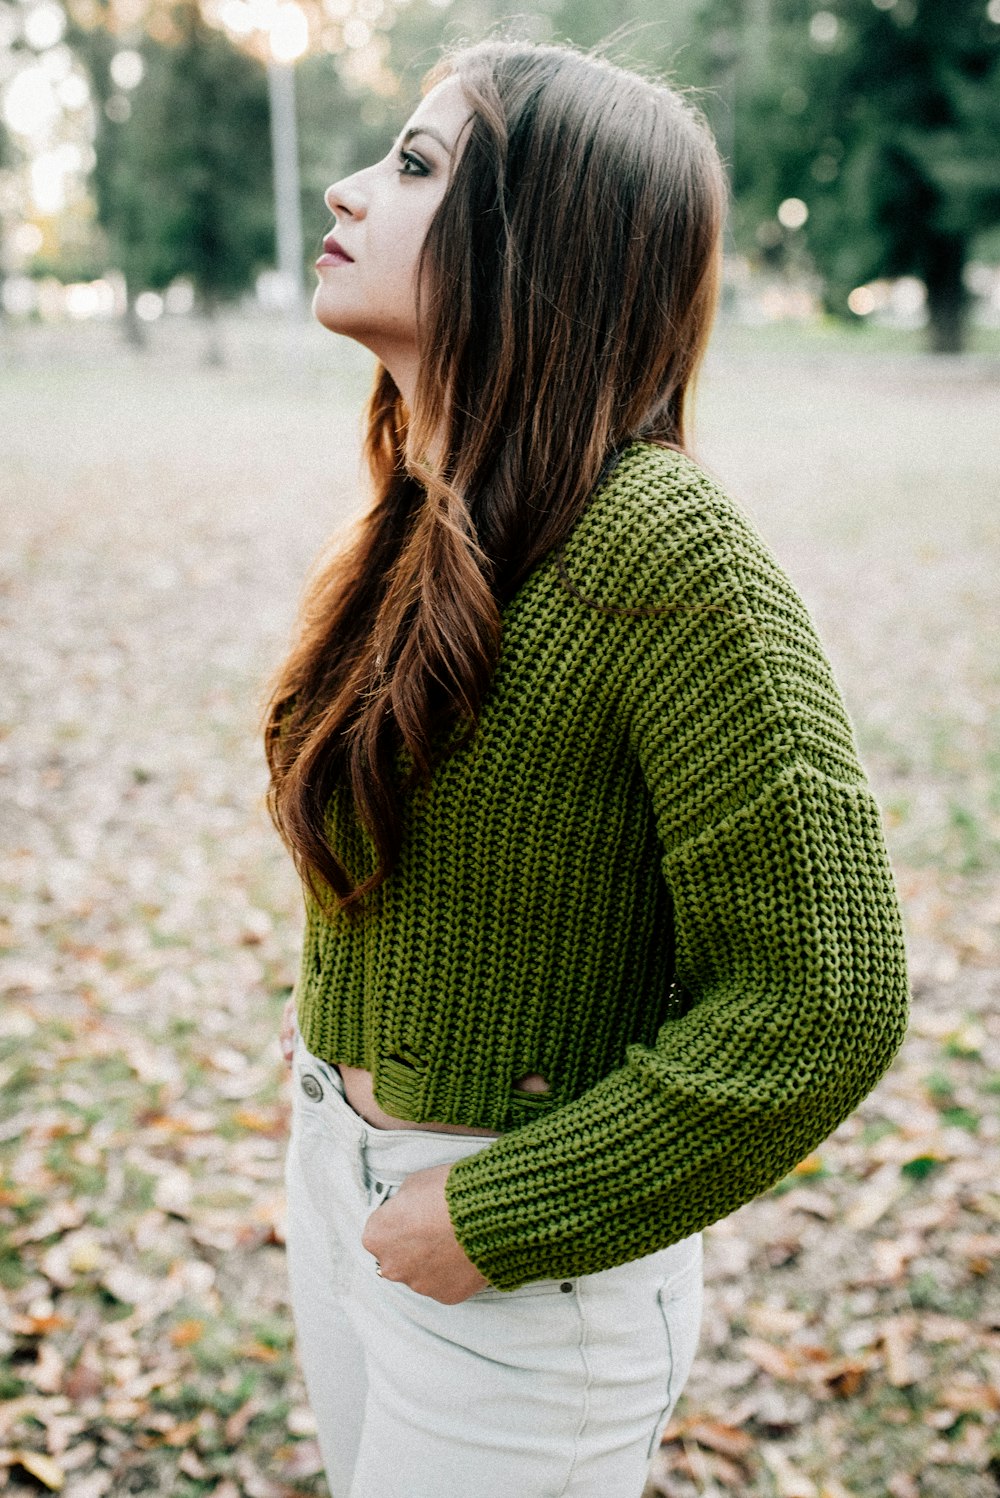 Woman wearing olive-green sweater photo – Free Apparel Image on Unsplash